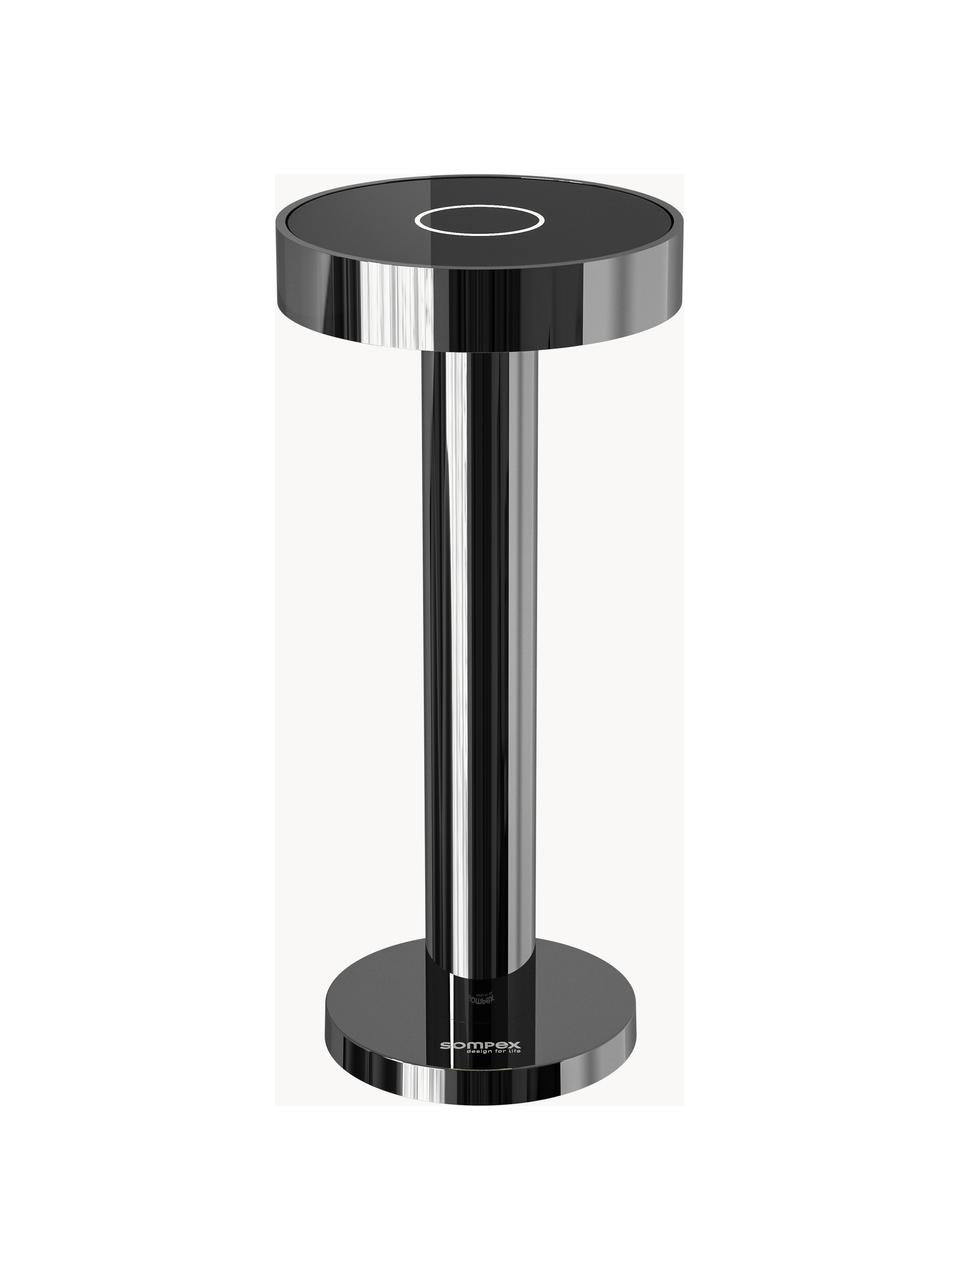 Kleine mobiele LED outdoor tafellamp Boro, dimbaar, Lamp: gecoat aluminium, Antraciet, Ø 9 x H 20 cm